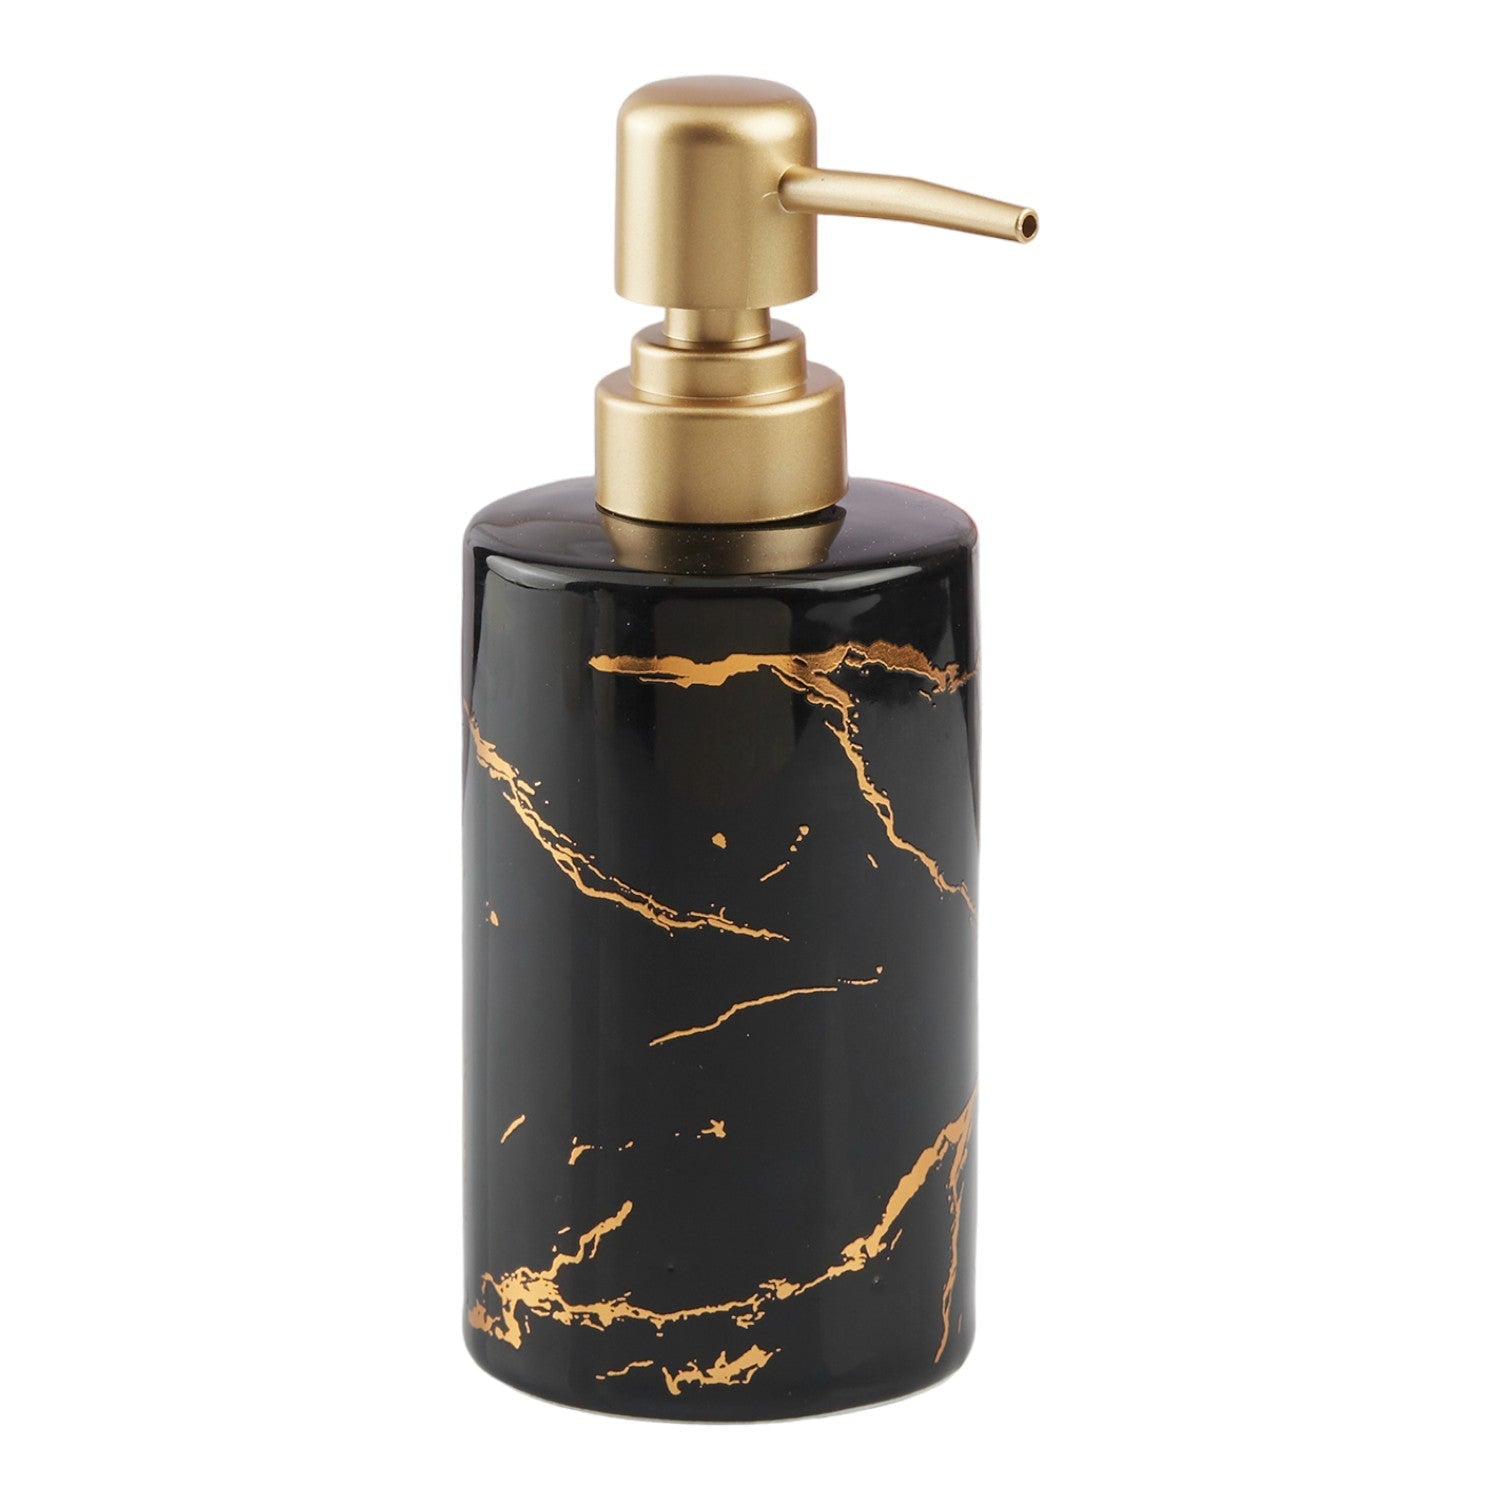 Ceramic Soap Dispenser liquid handwash pump for Bathroom, Set of 1, Black/Gold (10591)